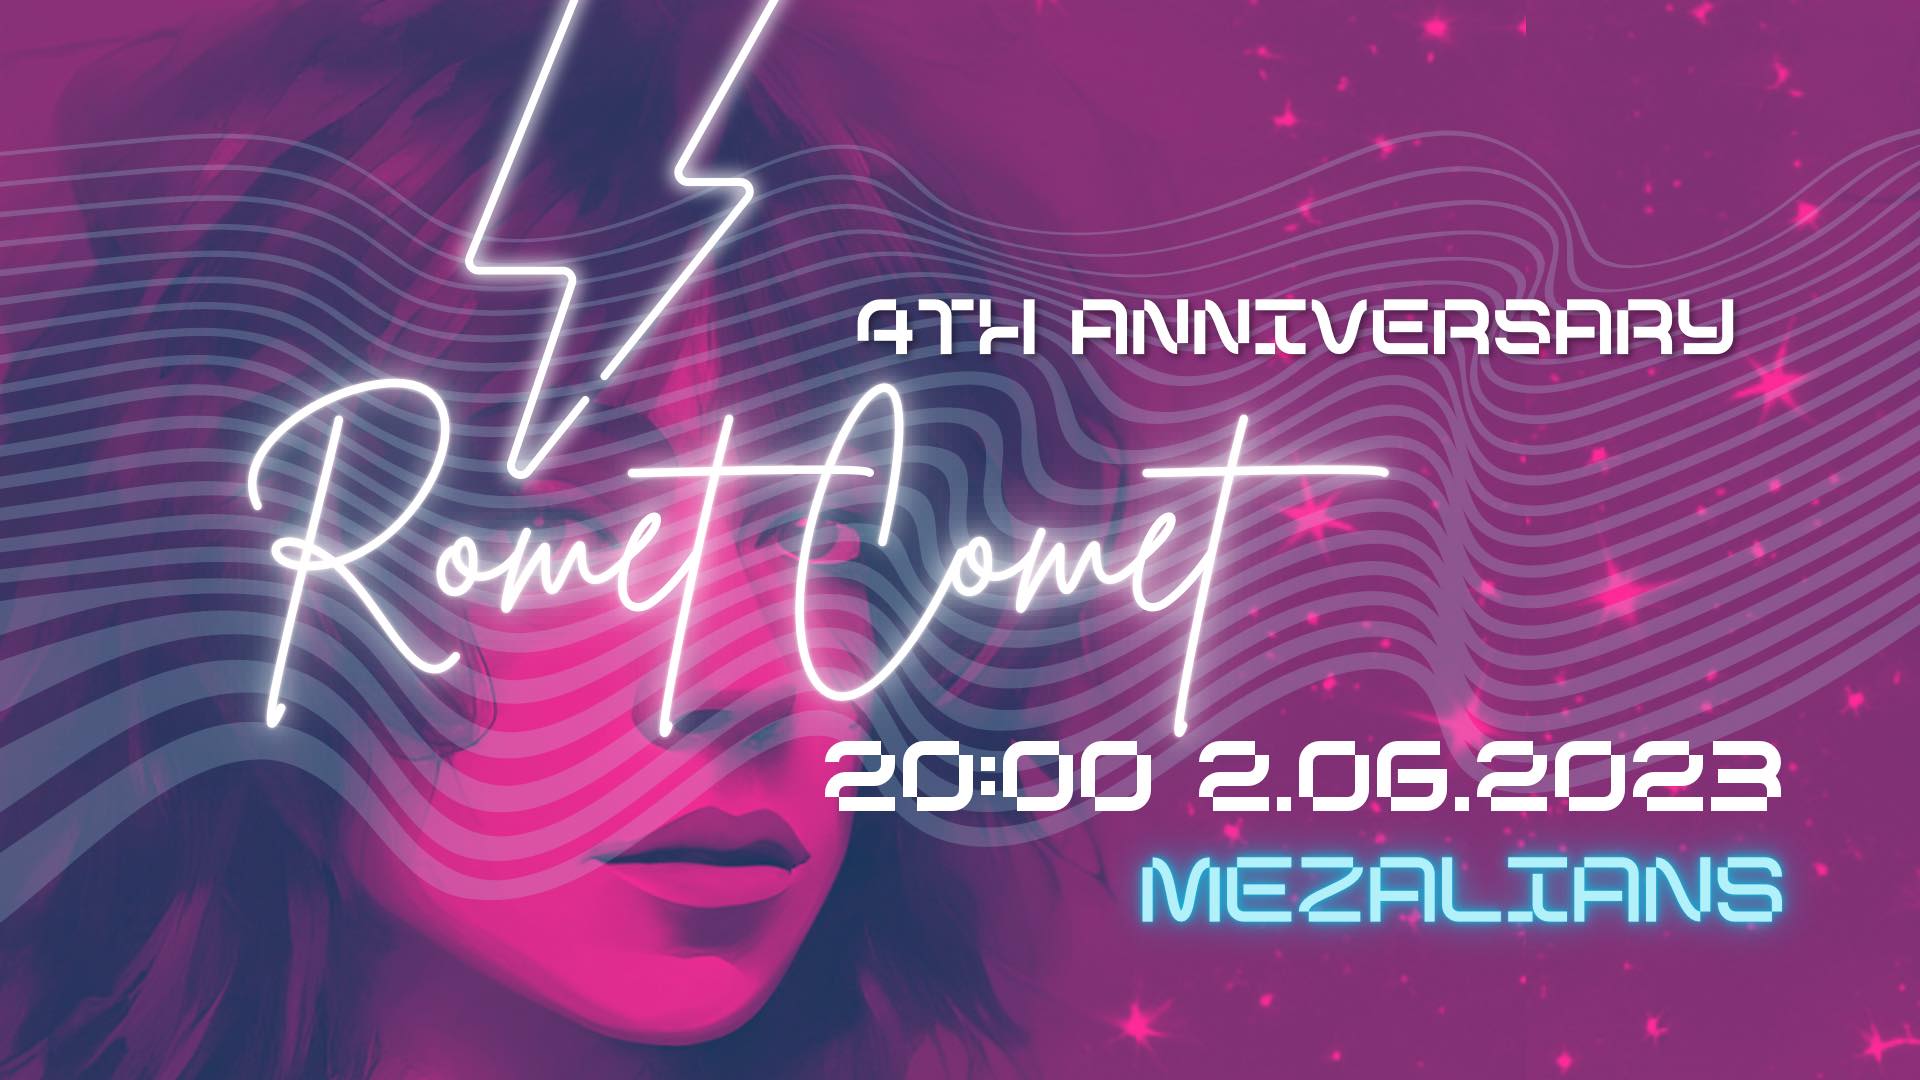 Romet Comet - 4th Anniversary